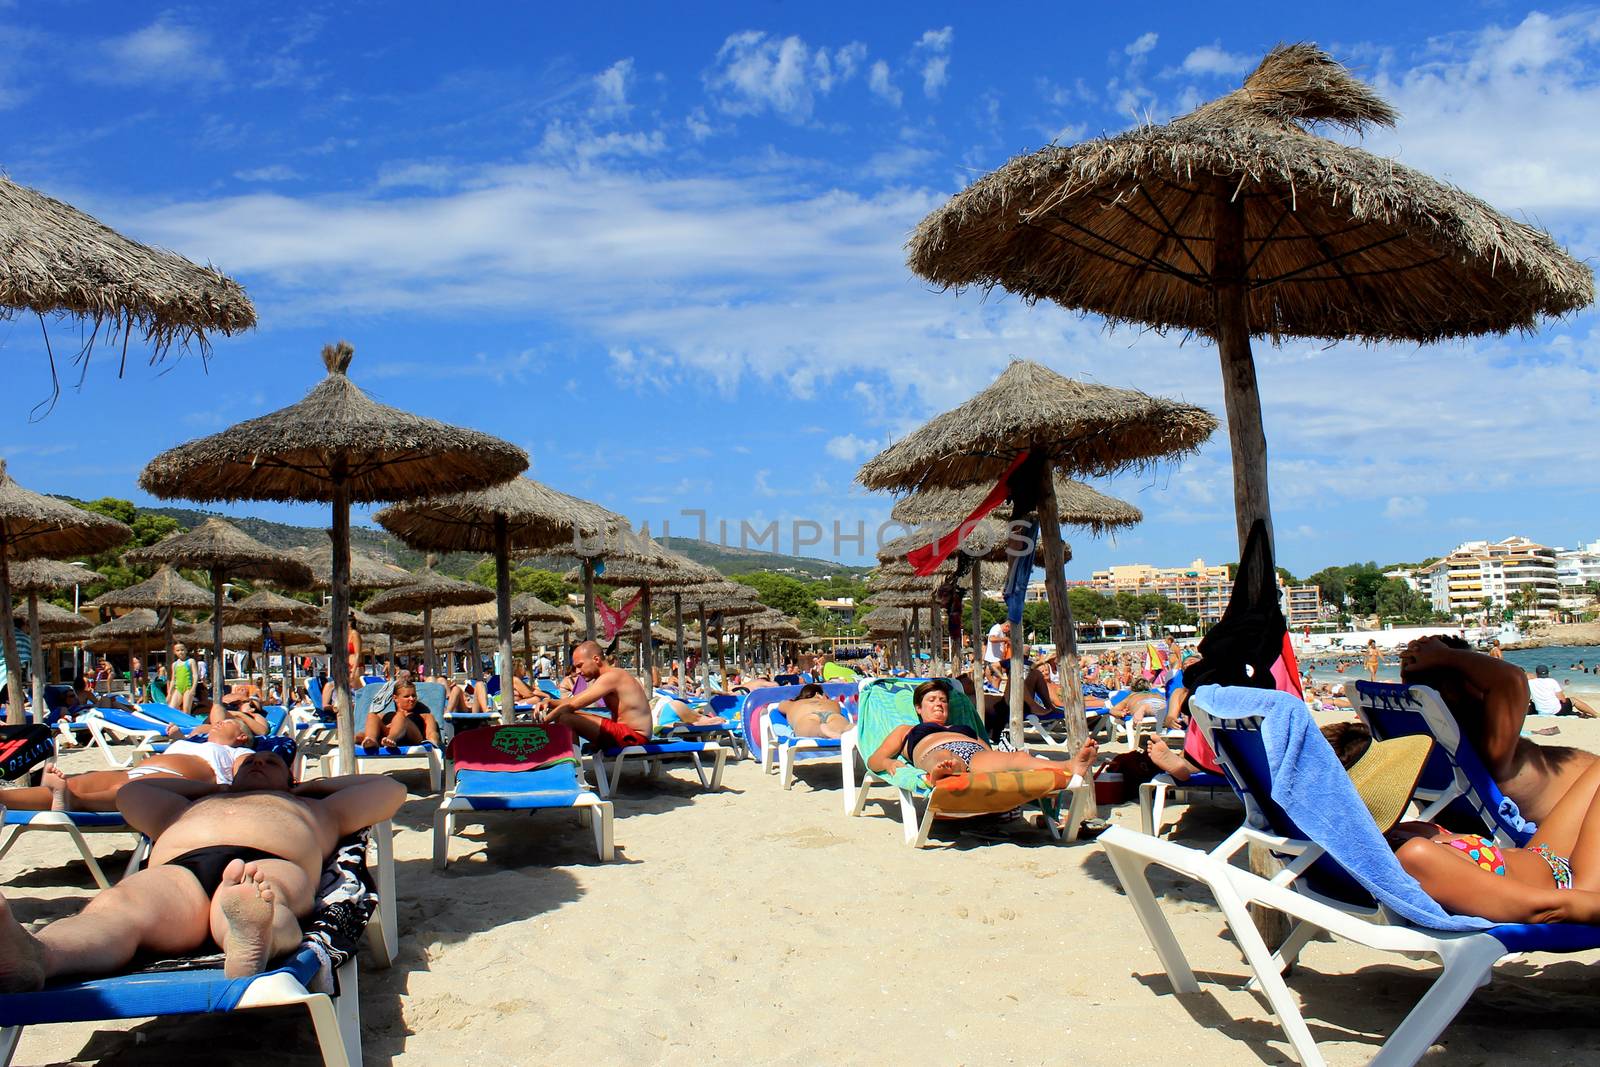 PALMA NOVA BEACH, MAJORCA, SPAIN - 24th August 2015: Palma Nova beach resort on the 24th August 2015. This is a popular and established tourist destination every summer.